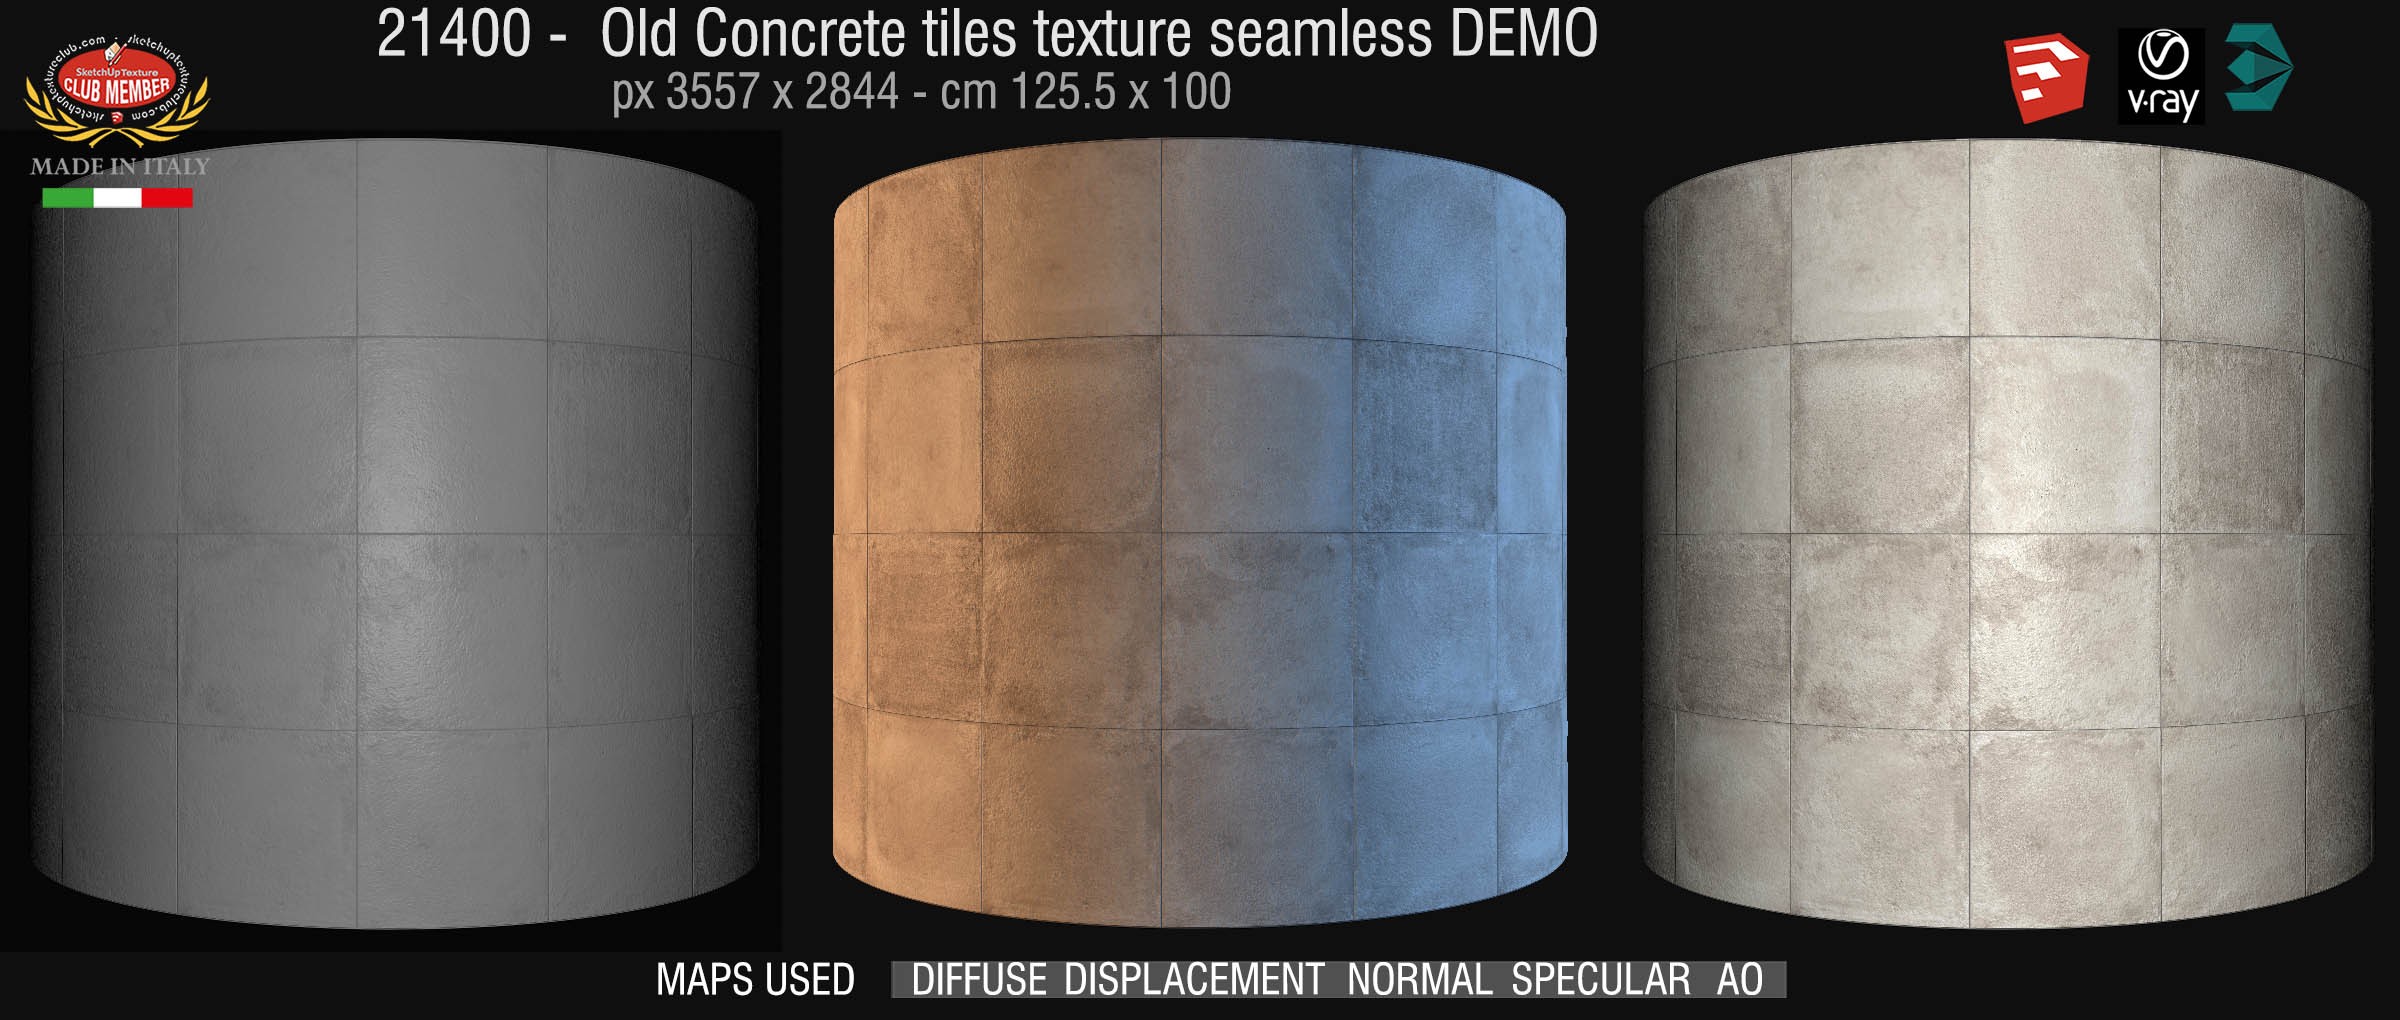 21400 old concrete tiles texture seamless + maps DEMO